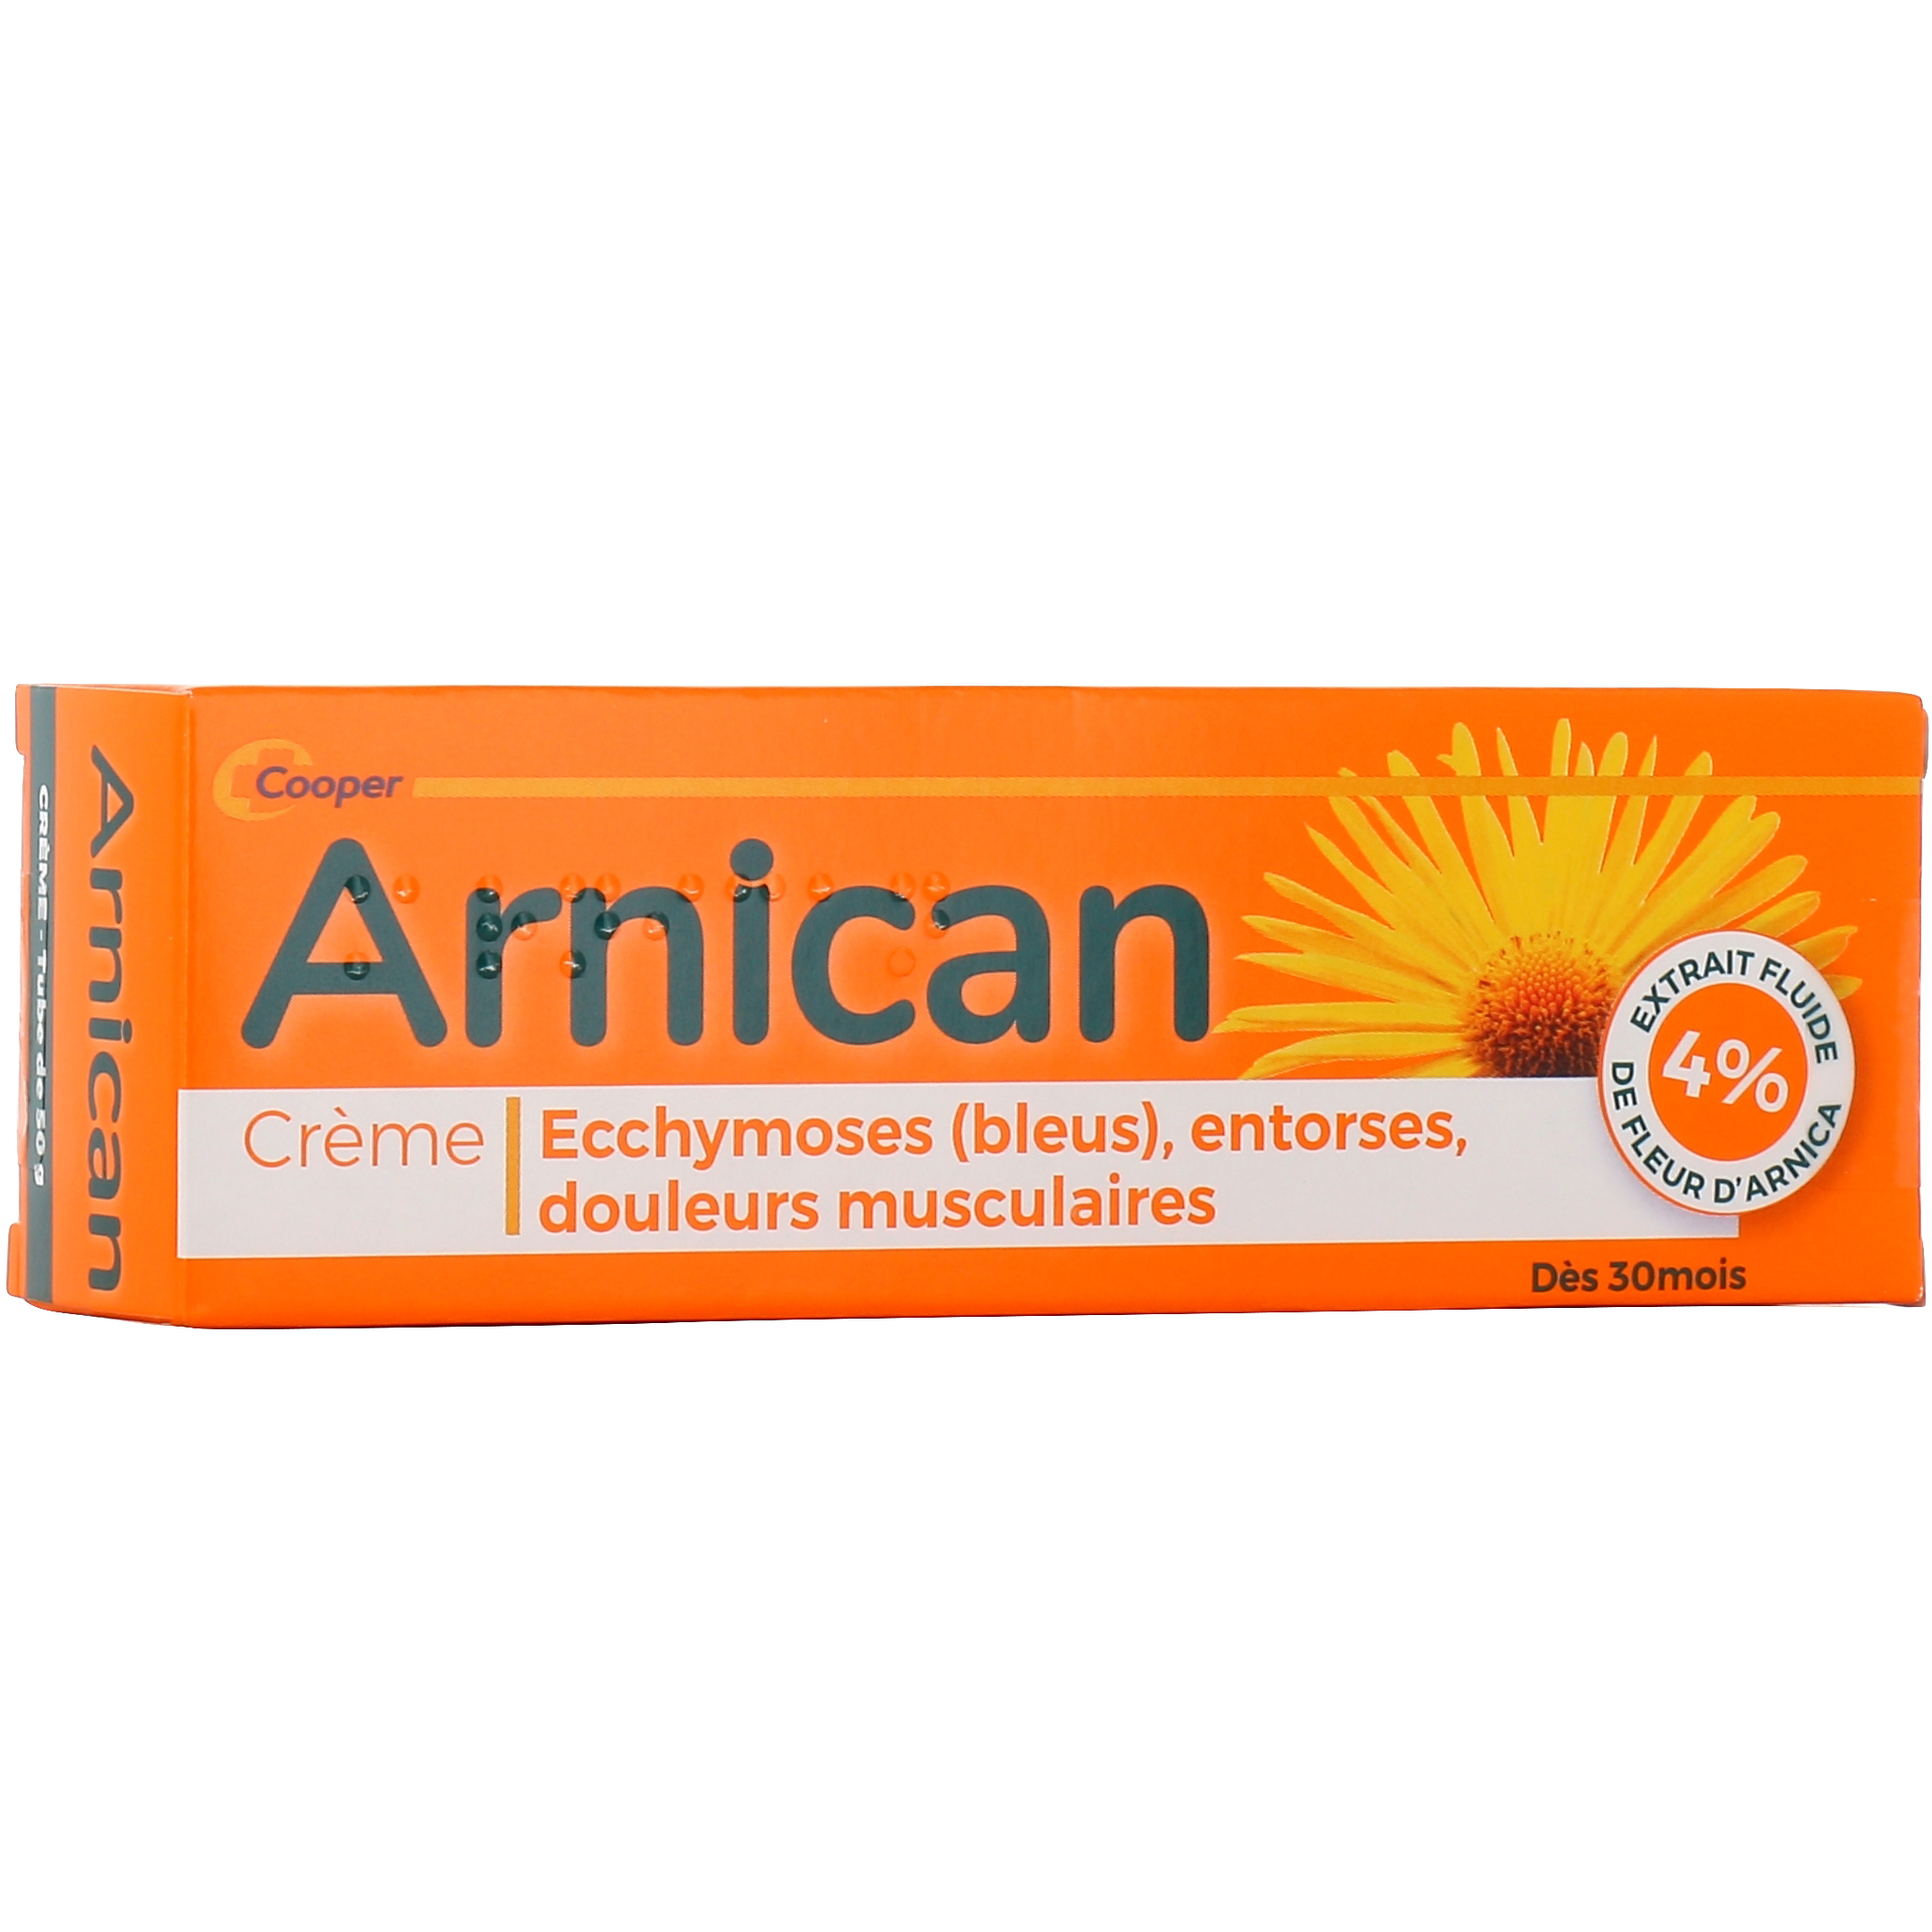 Arnican crème - Pharmacie des Drakkars